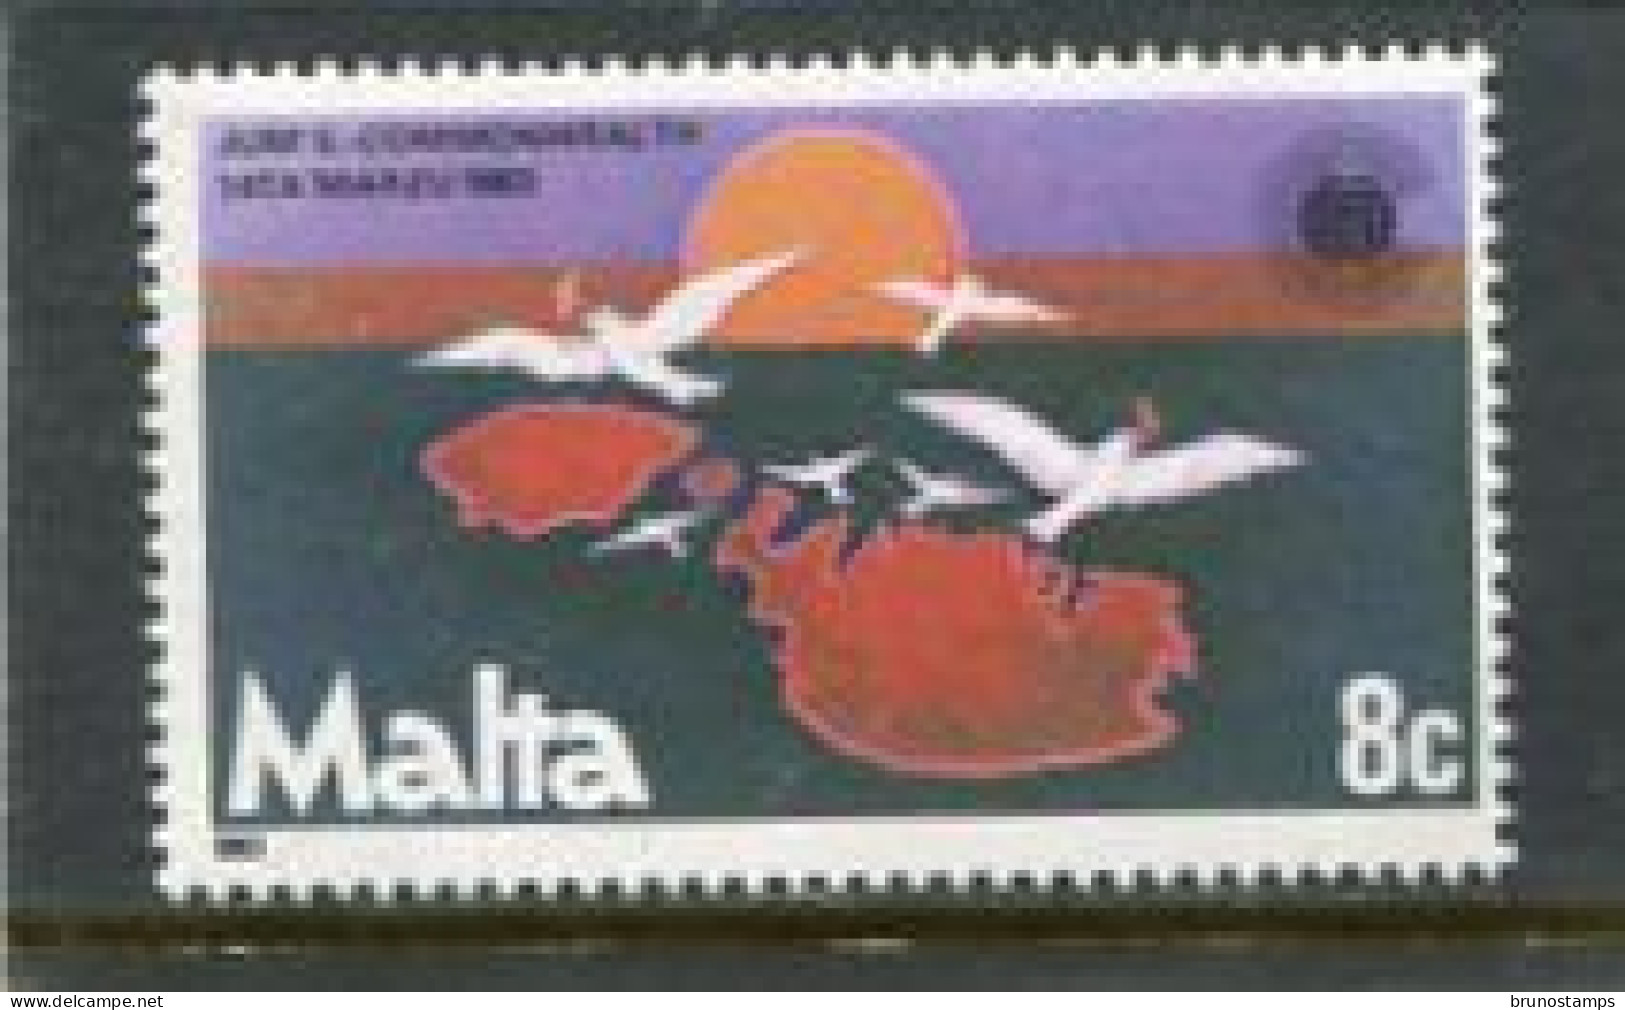 MALTA - 1983  8c  COMMONWEALTH DAY  MINT NH - Malta